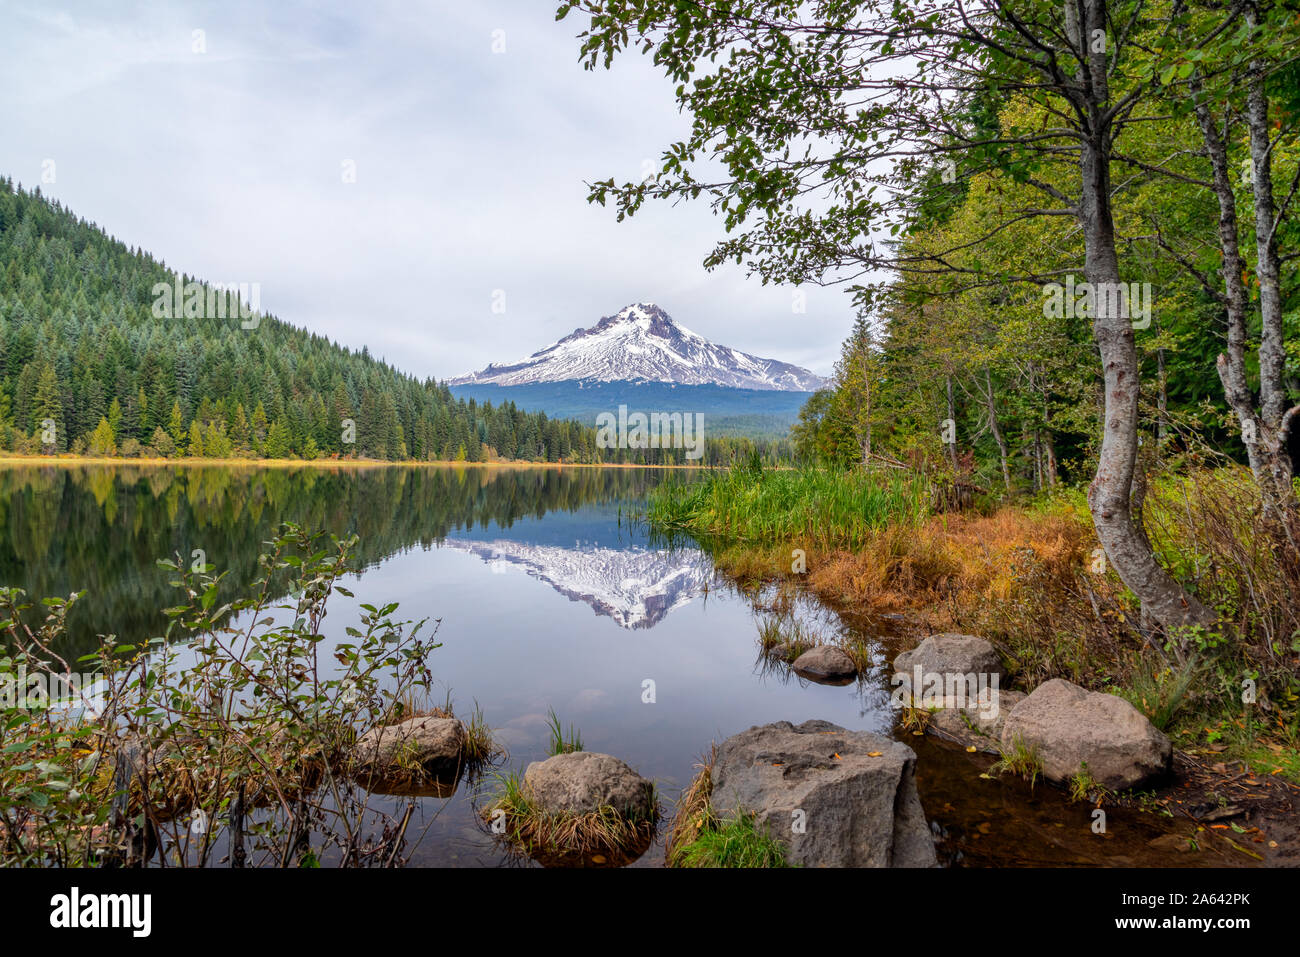 Mt. Hood reflecting in Trillium Lake with rocks and trees in an idyllic scene in Oregon, USA Stock Photo